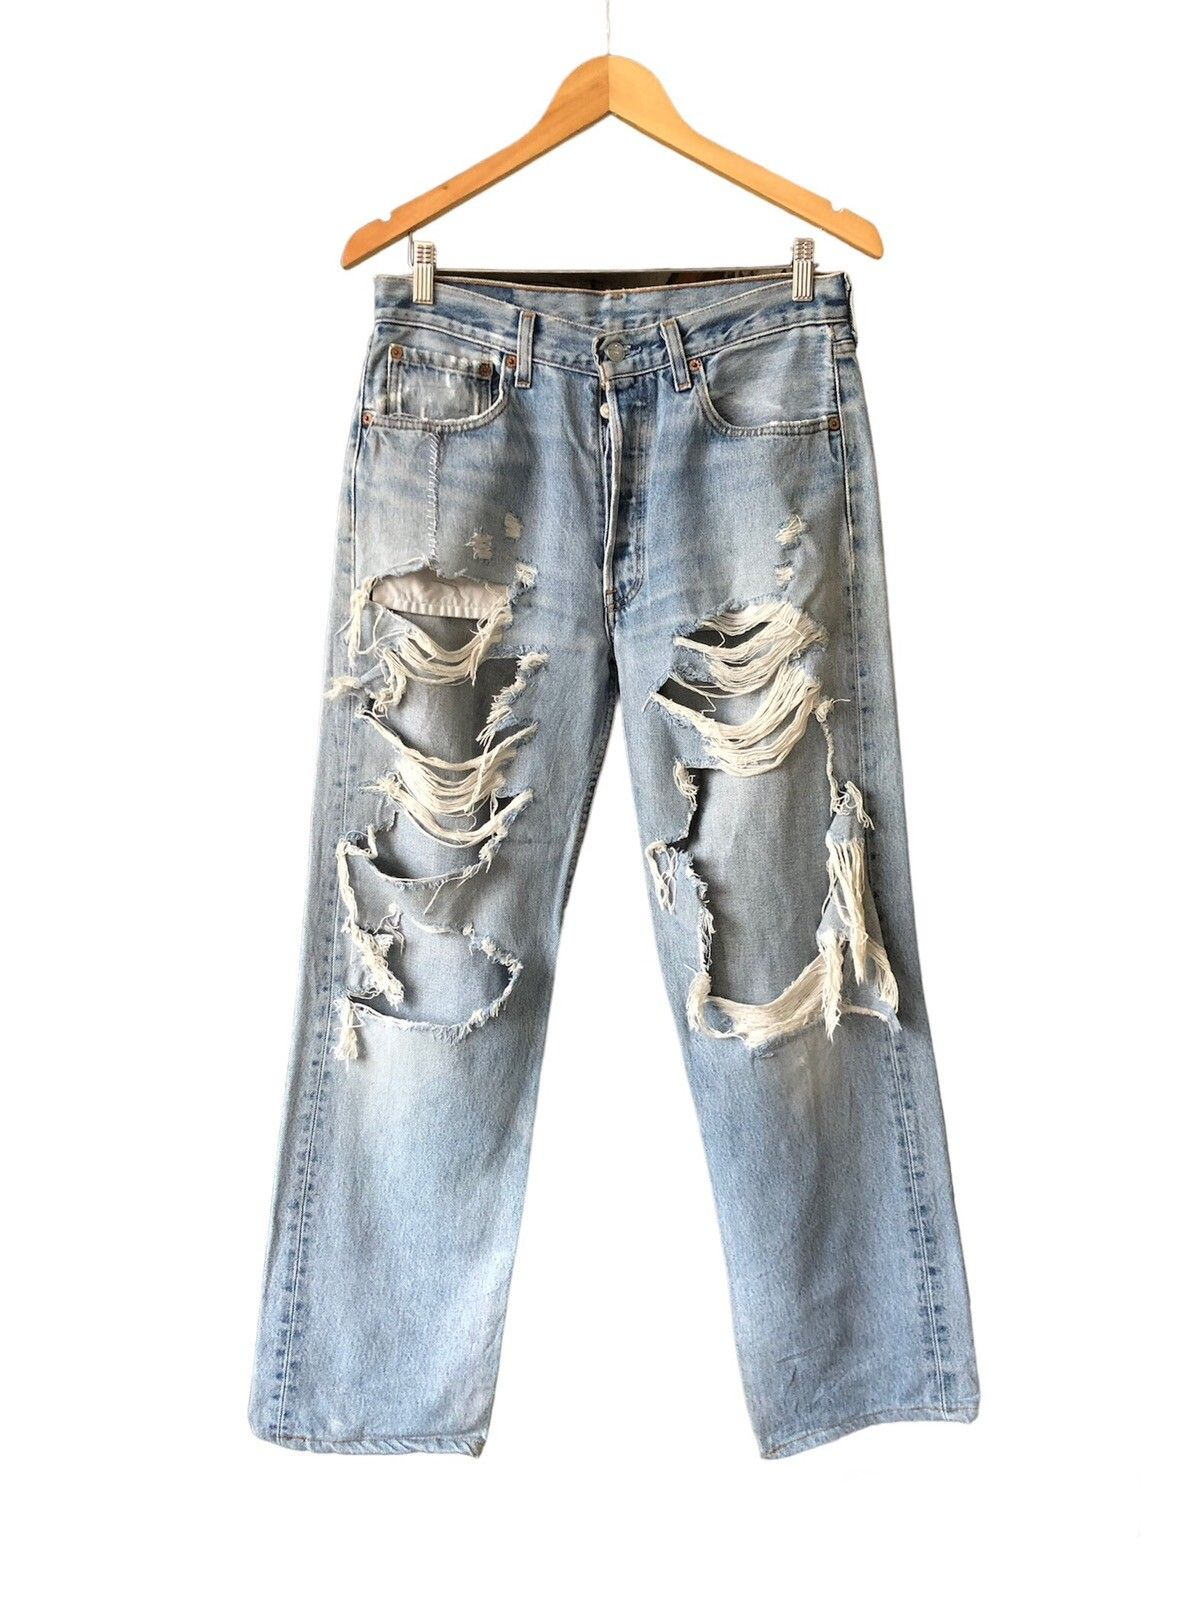 Vintage Rare❗️Vintage 90s Levis 501 Distressed Jeans Like Kapital Size US 30 / EU 46 - 1 Preview